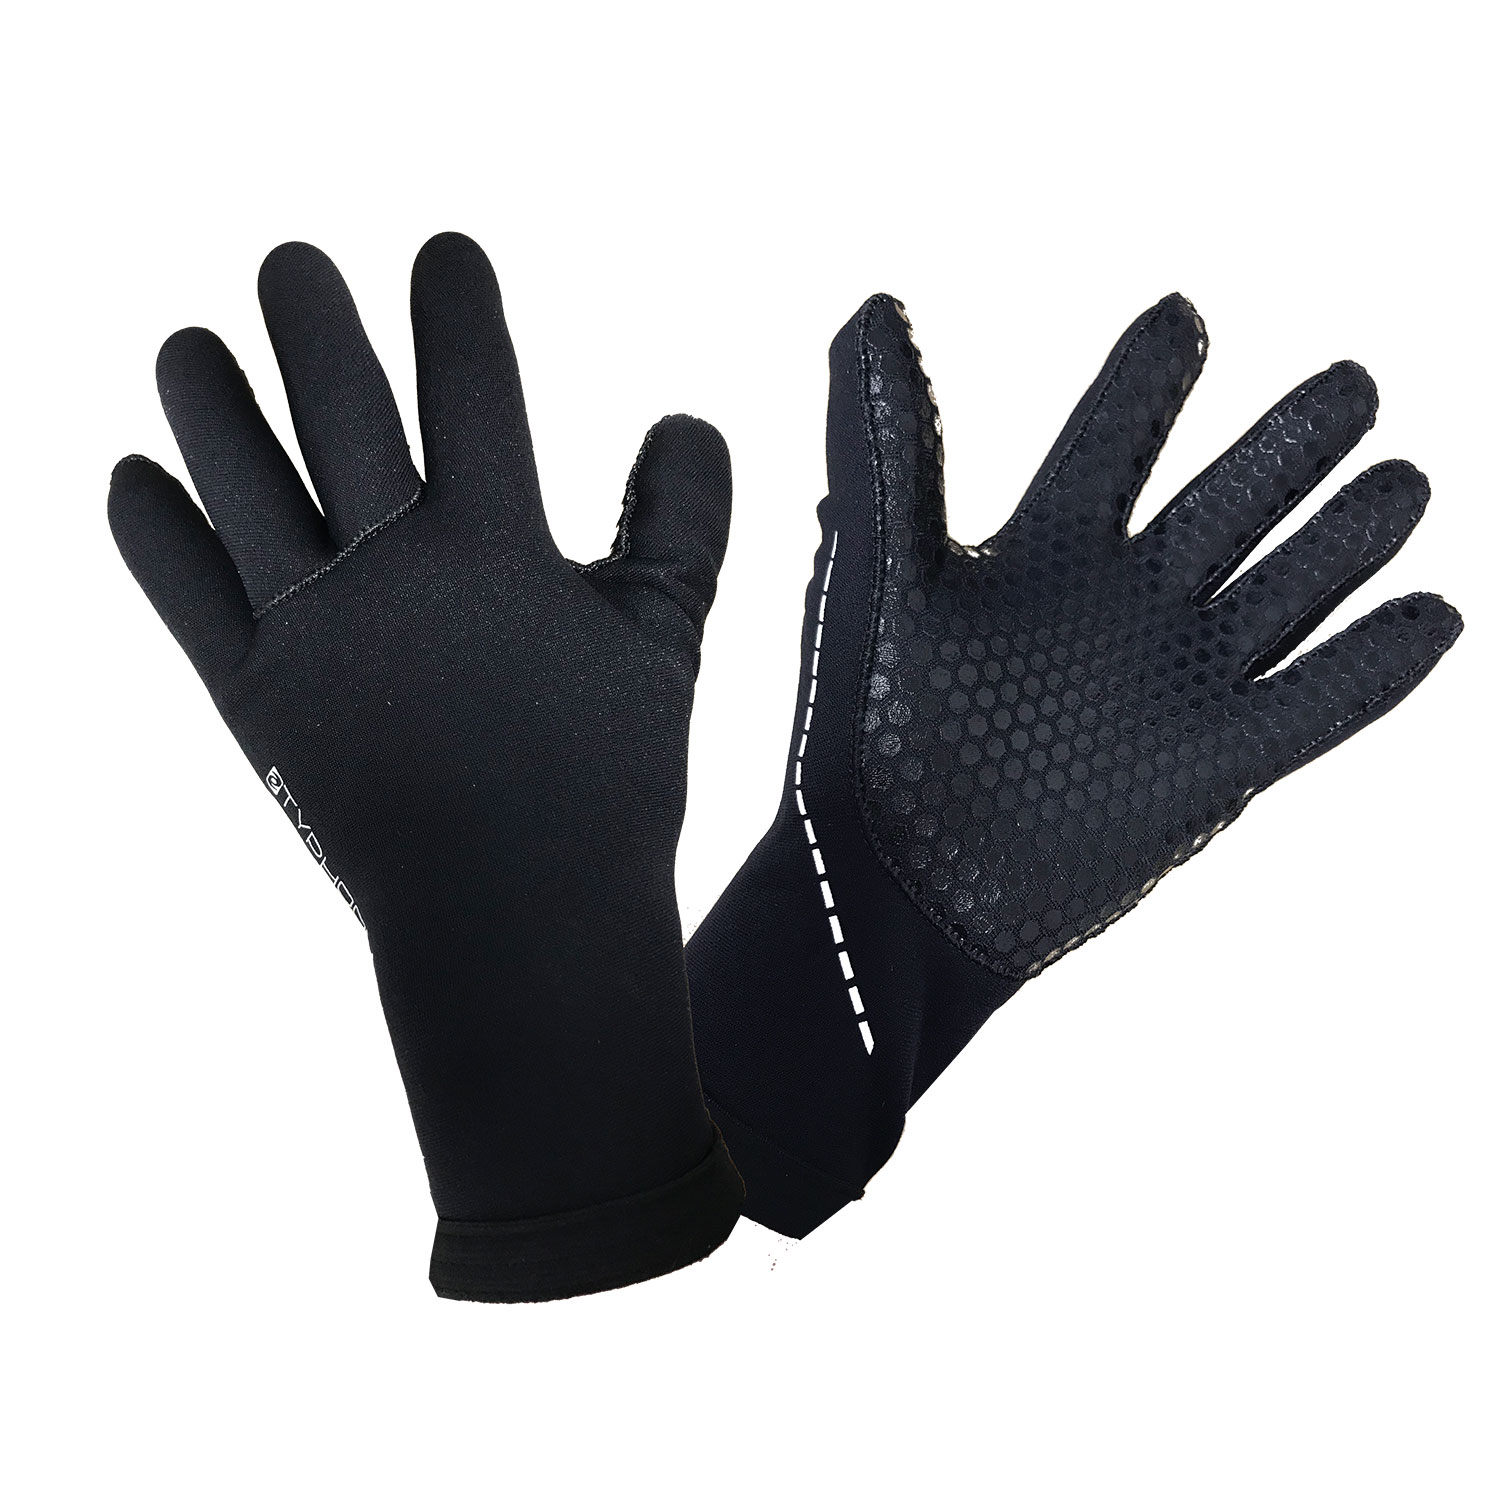 Typhoon Neo 3mm Wetsuit Gloves 2020 - Black - 310190 | Coast Water Sports